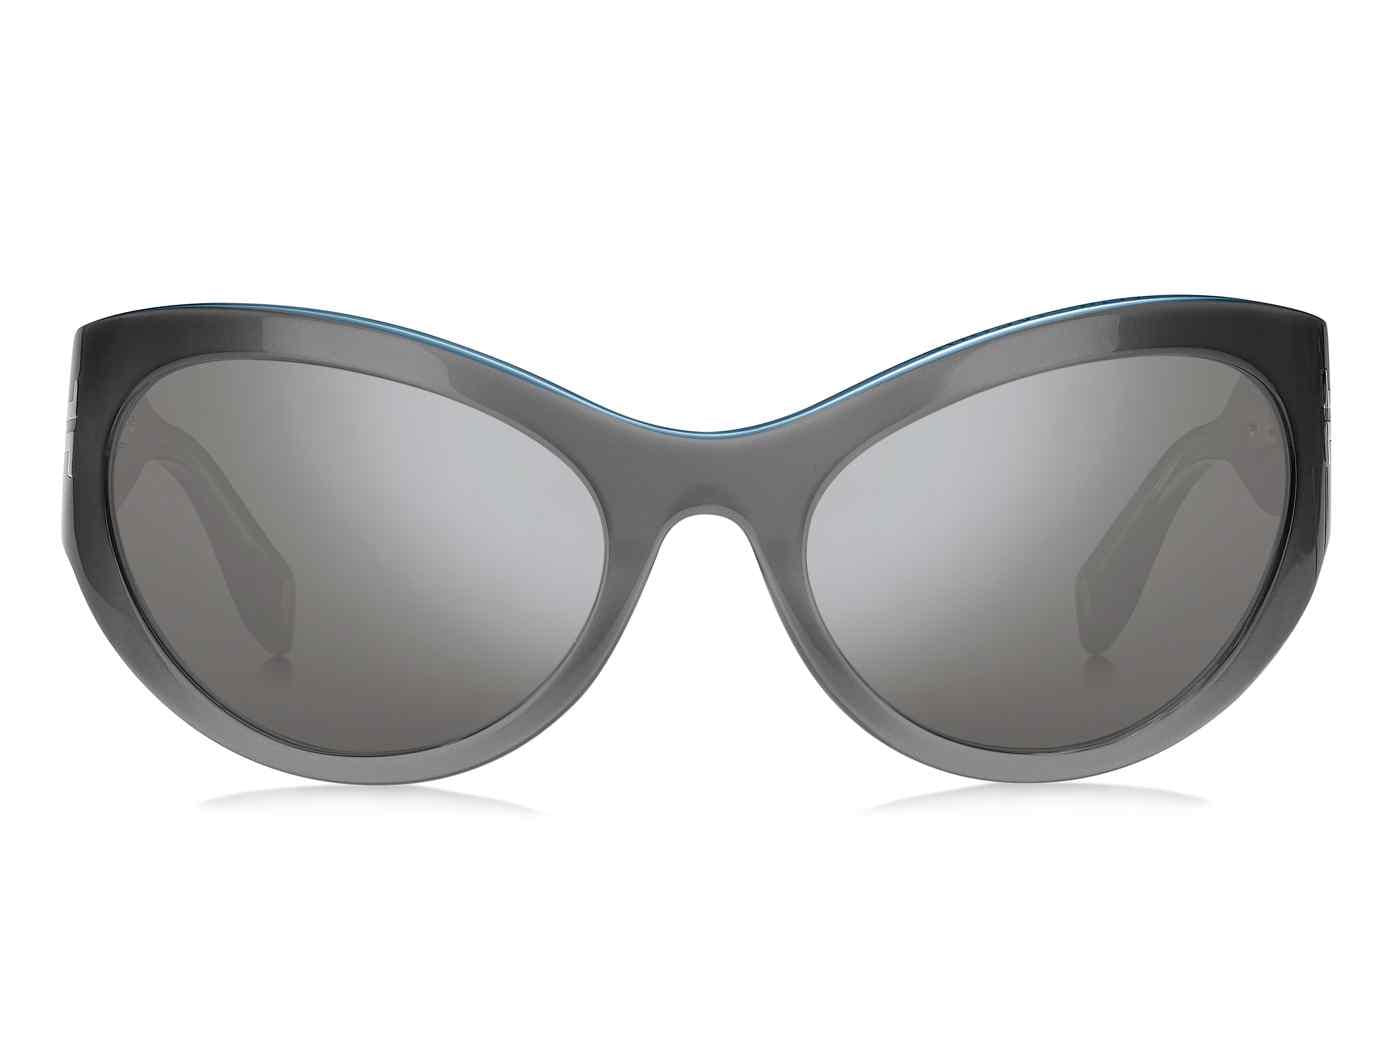 Chanel Sunglasses - Cat Eyes - 5416